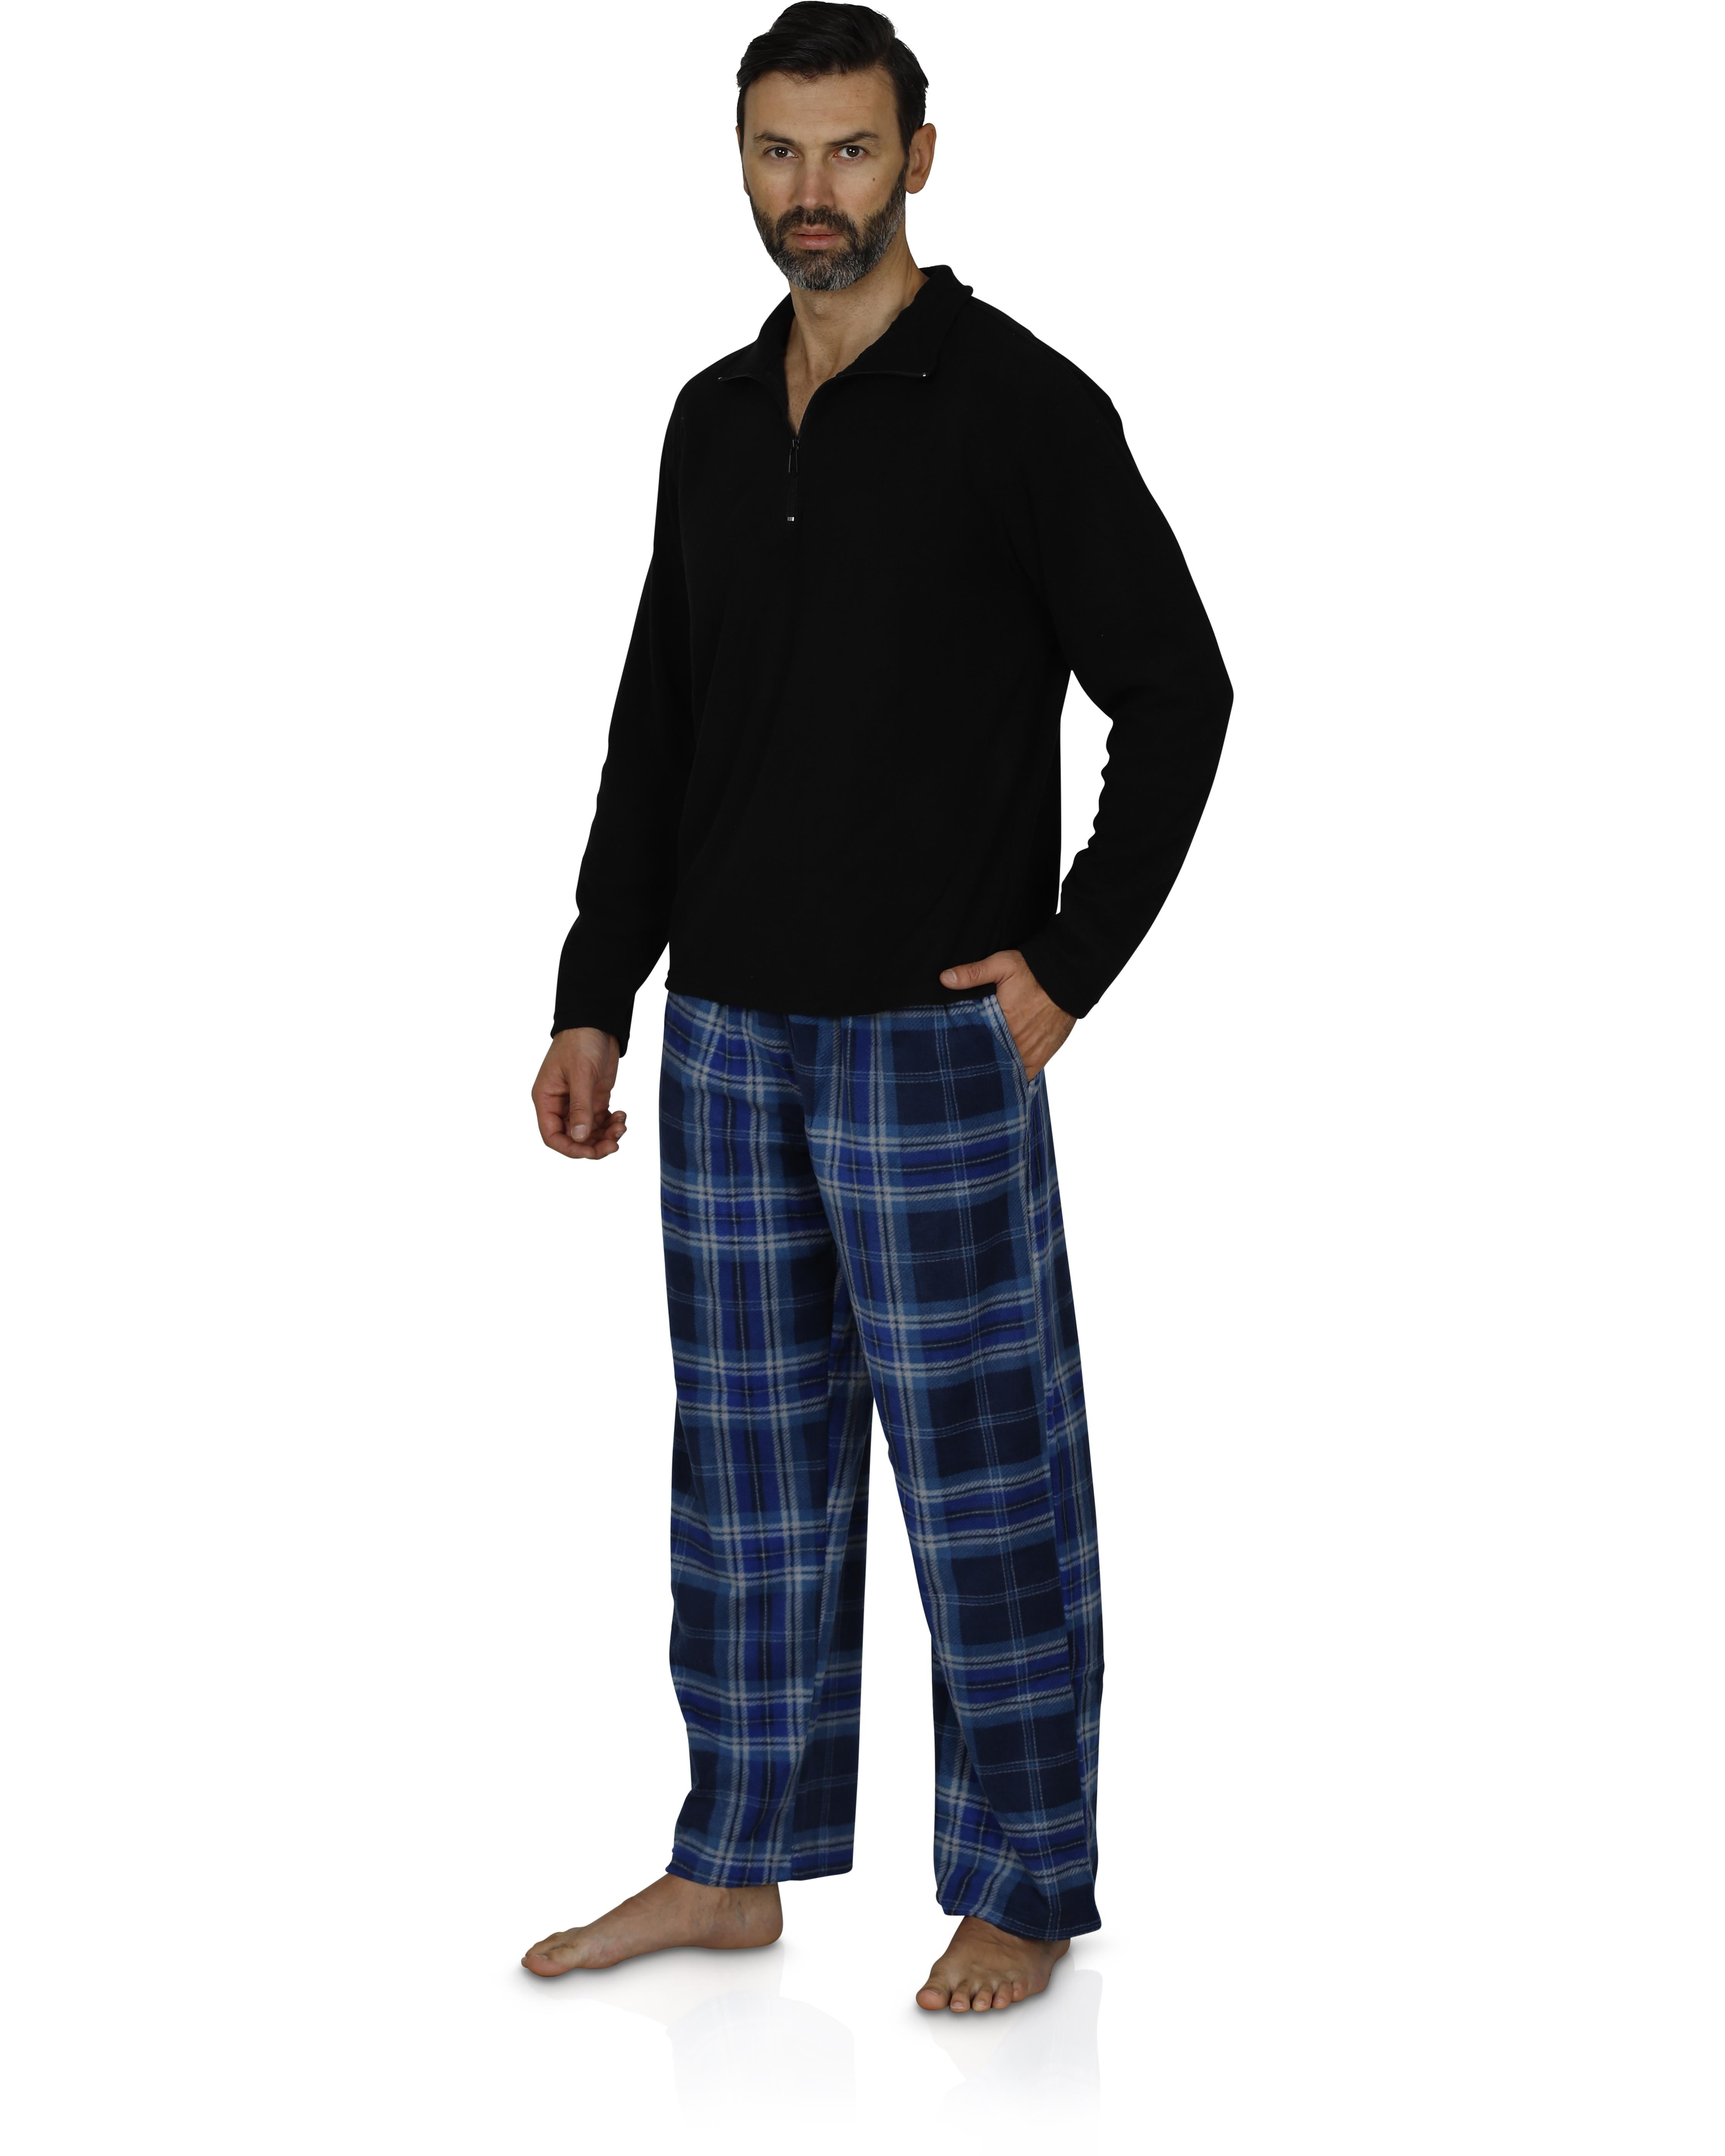 Intimo - Mens Pajama Long Sleeve Top and Buffalo Plaid Pants Loungewear